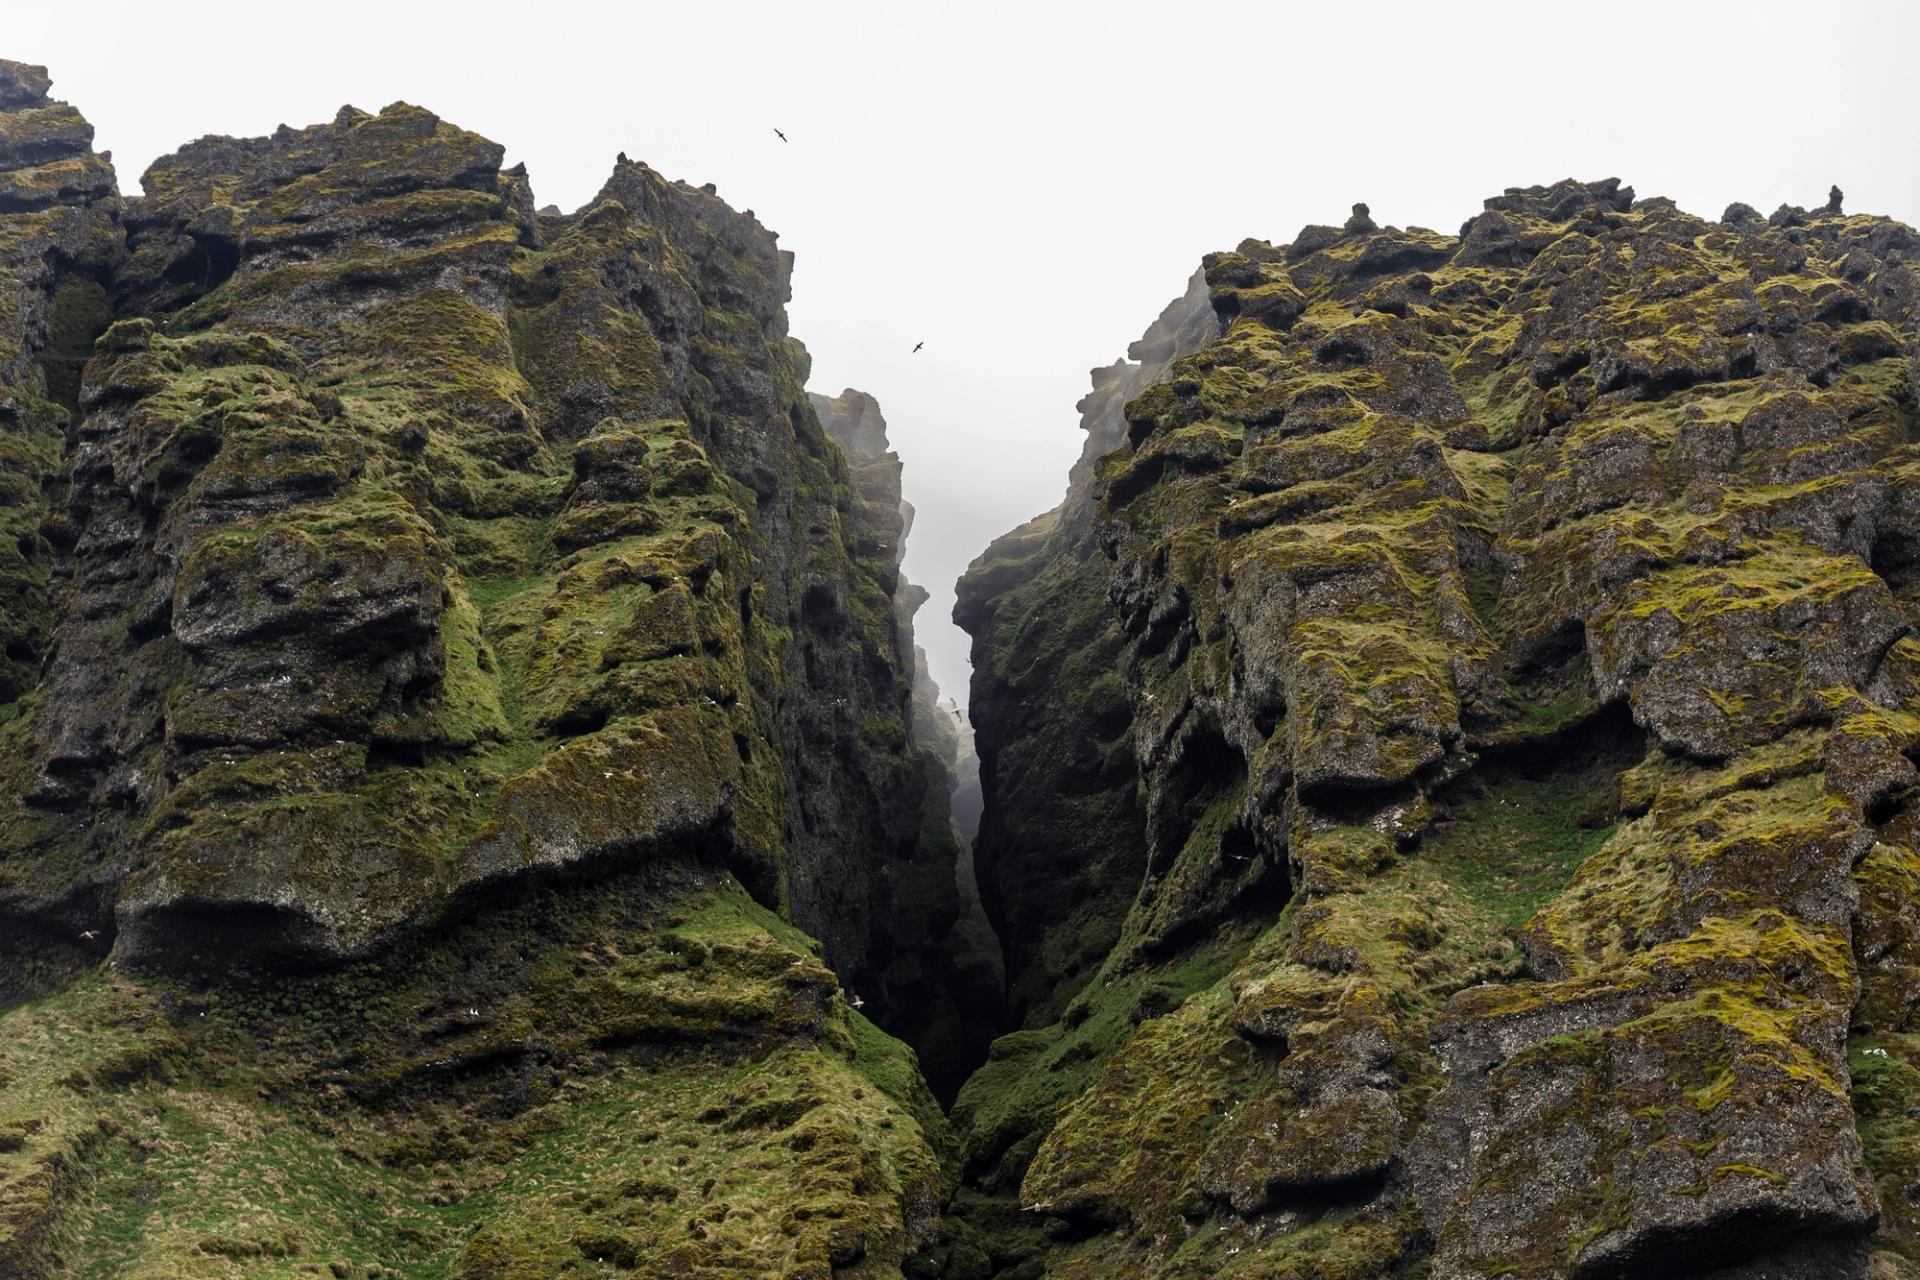 The narrow fissure and mossy rocks of Rauðfeldsgjá Gorge.